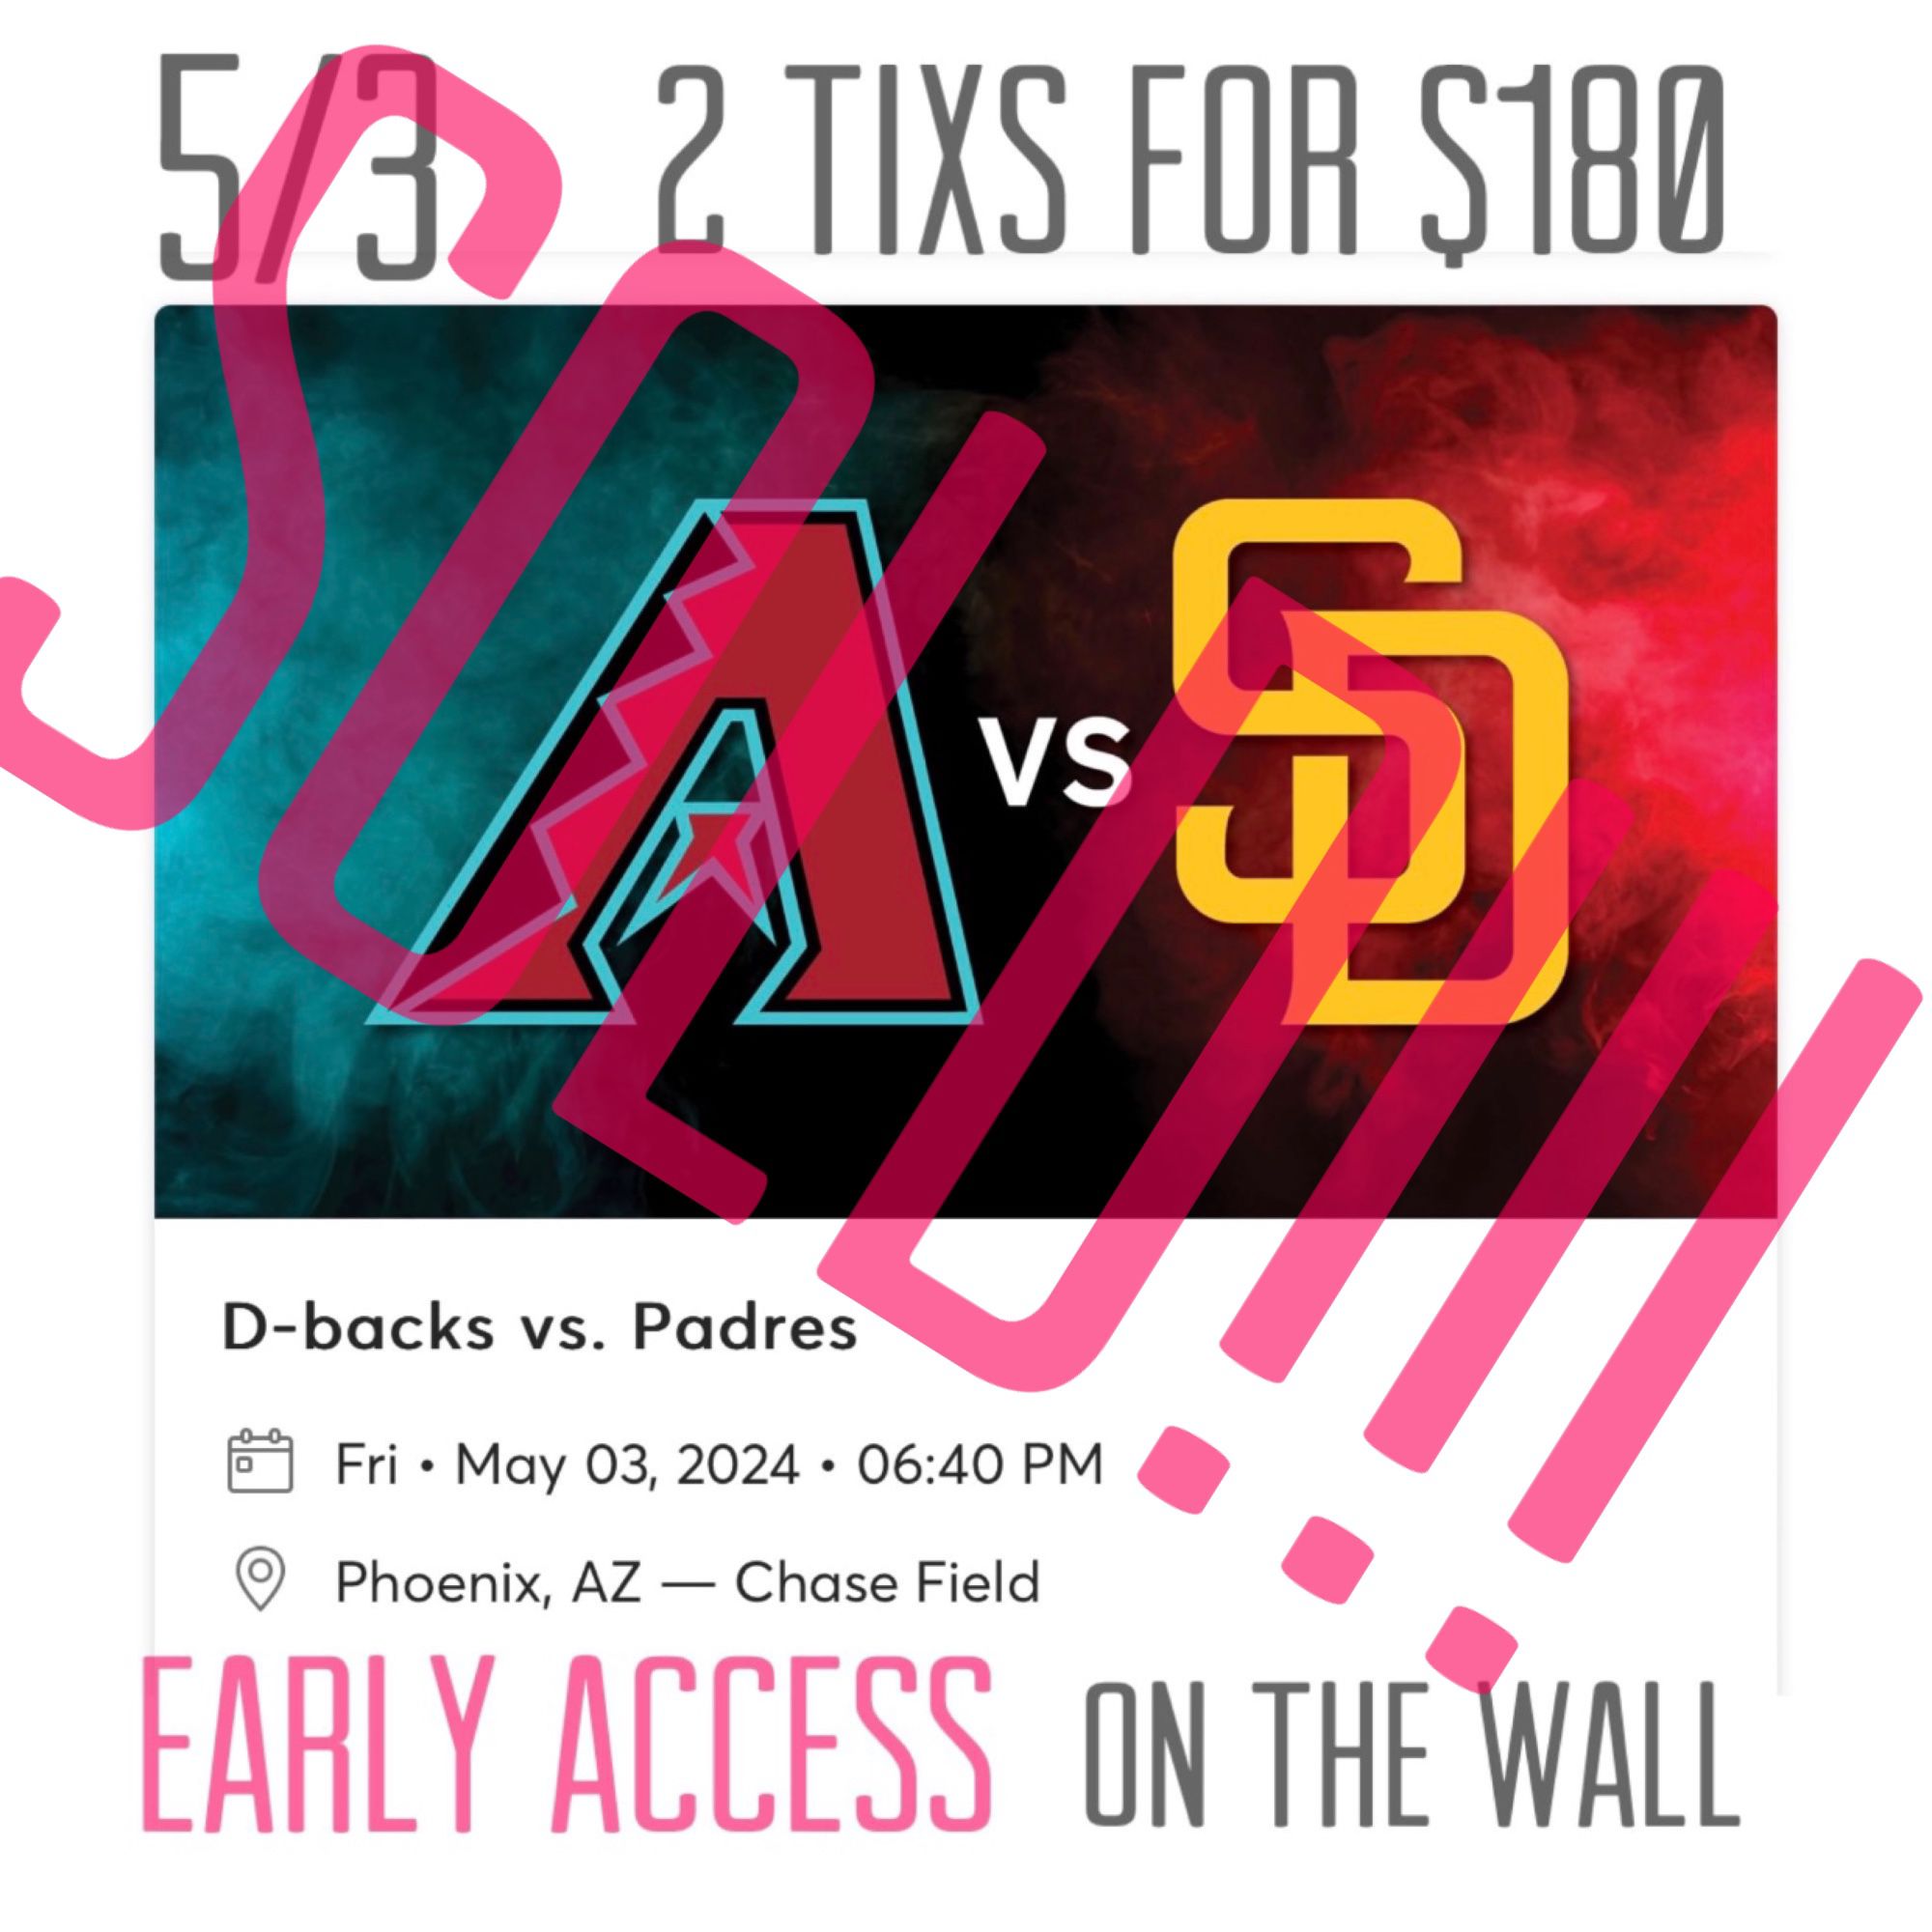 Arizona Diamondbacks Vs San Diego Padres Friday 5/3 2 Tixs For $180